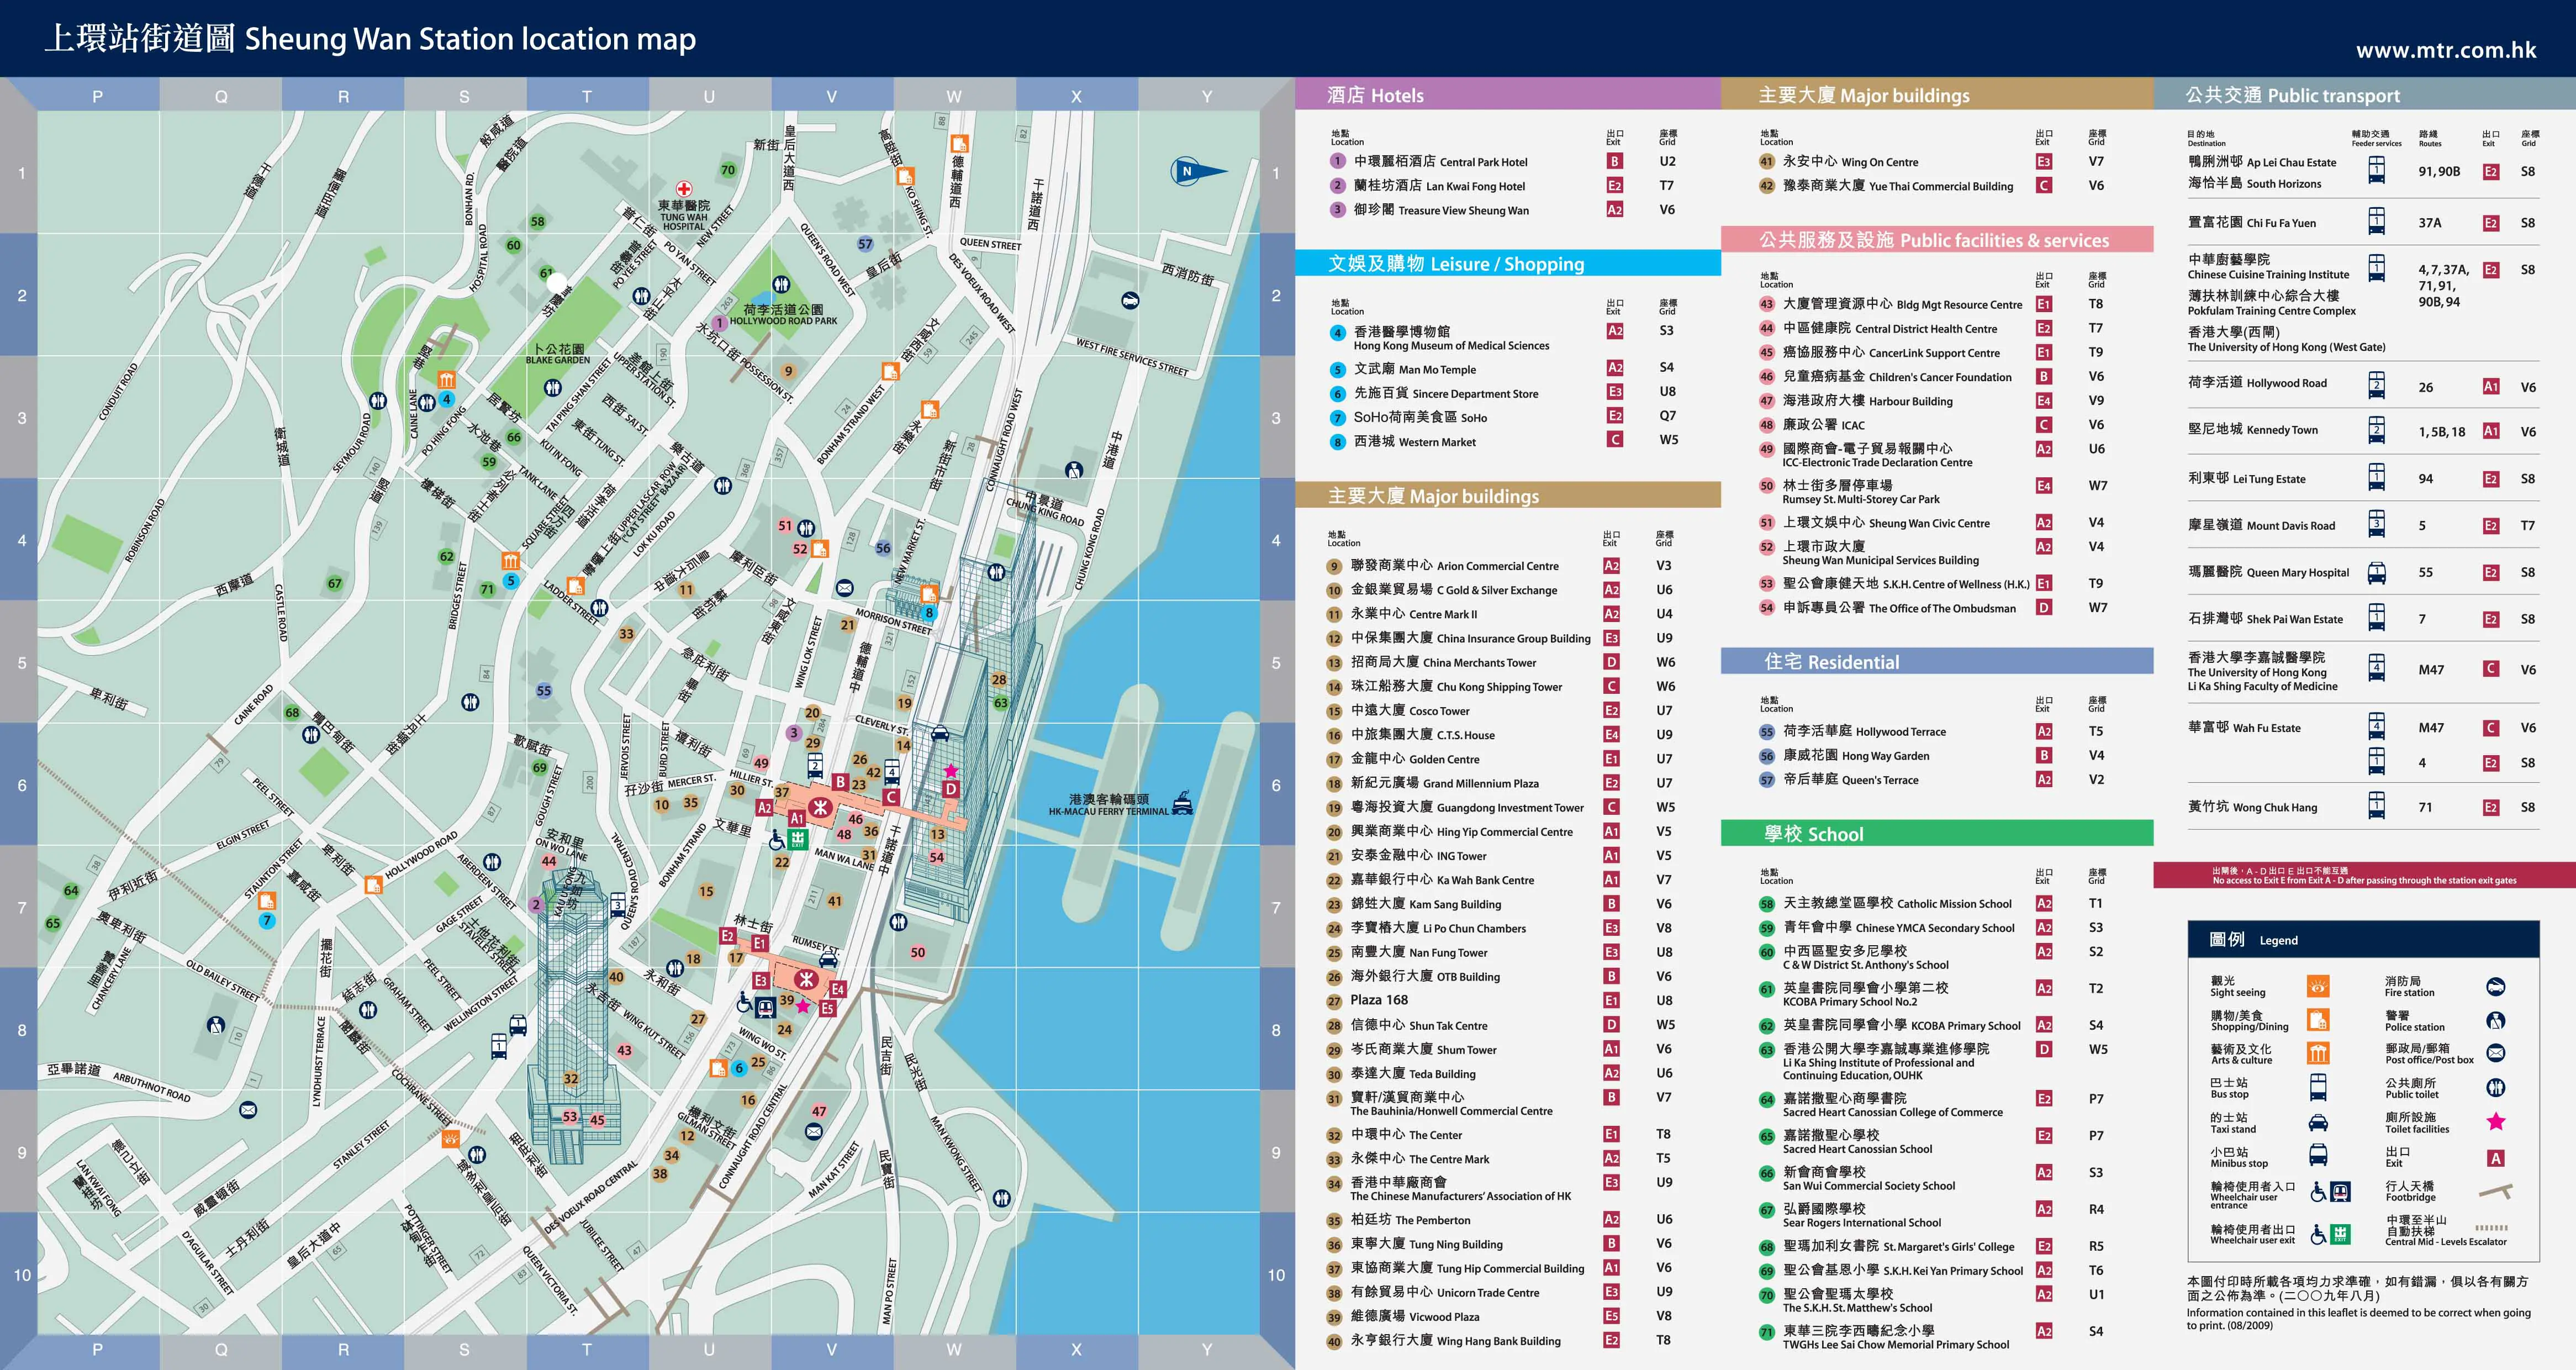 Hong Kong: Sheung Wan MTR station area map 2012-2013